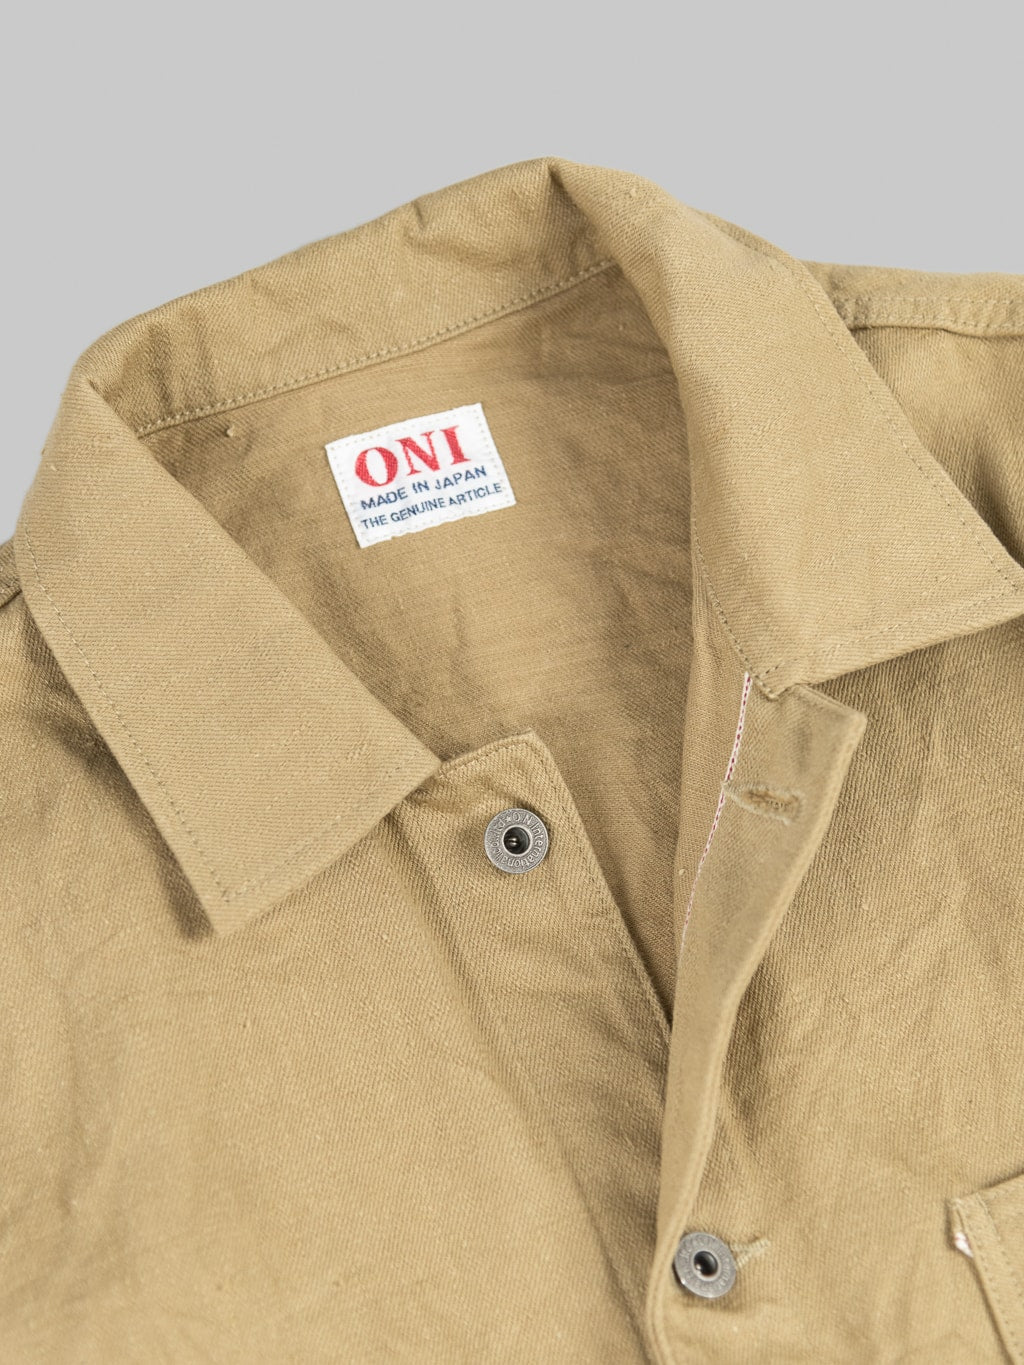 ONI Denim 03501 Sulfur Coverall Jacket Khaki Beige open collar